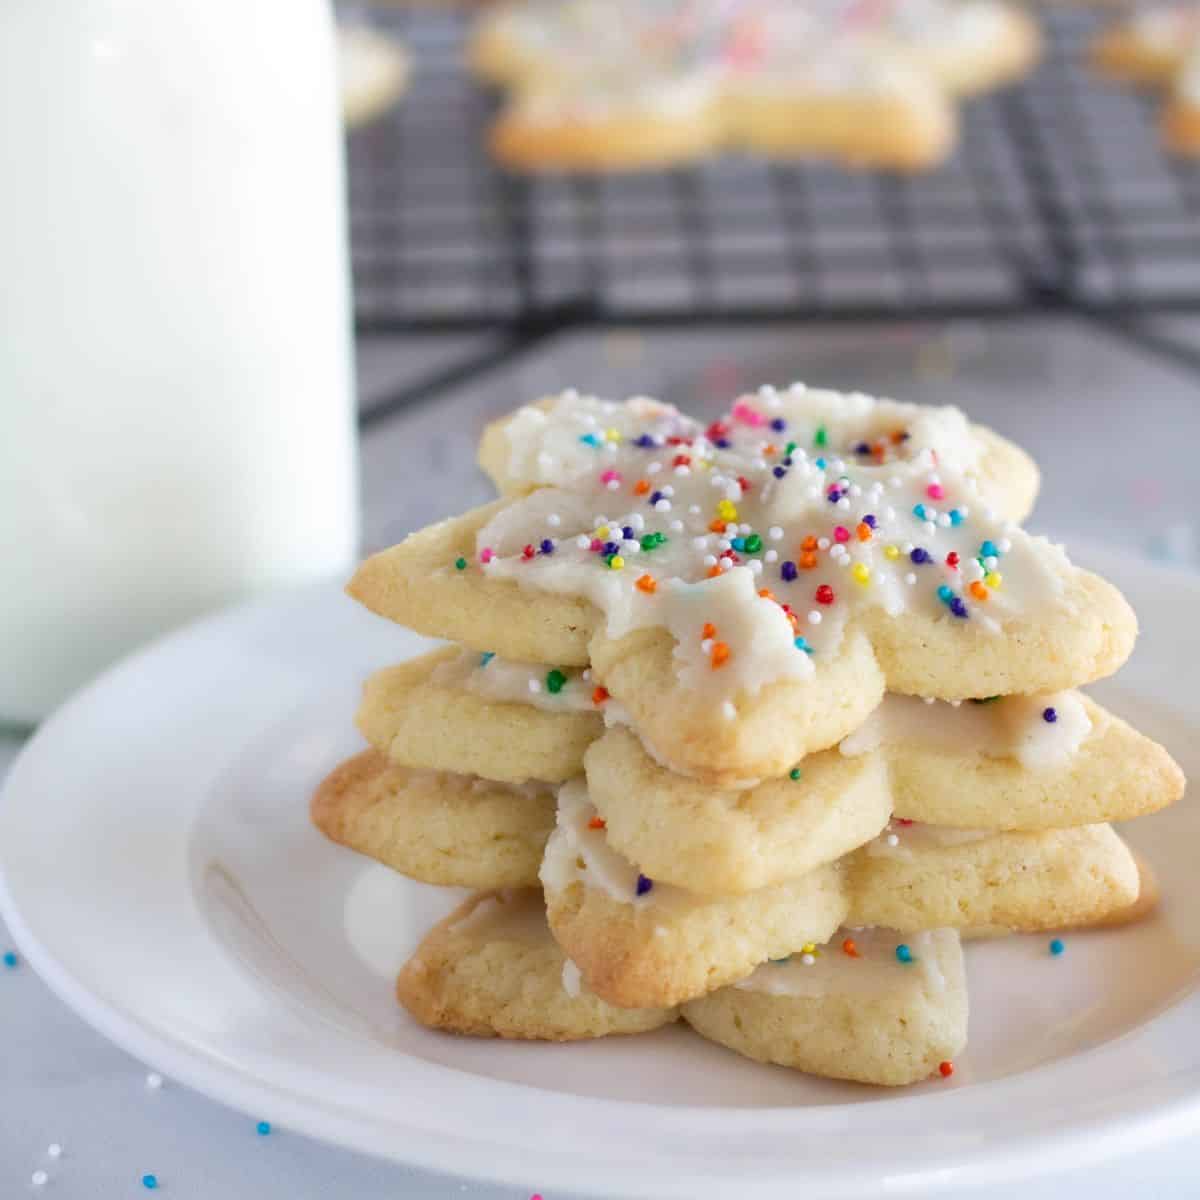 How To Make Keto Sugar Free Sprinkles - Bake It Keto